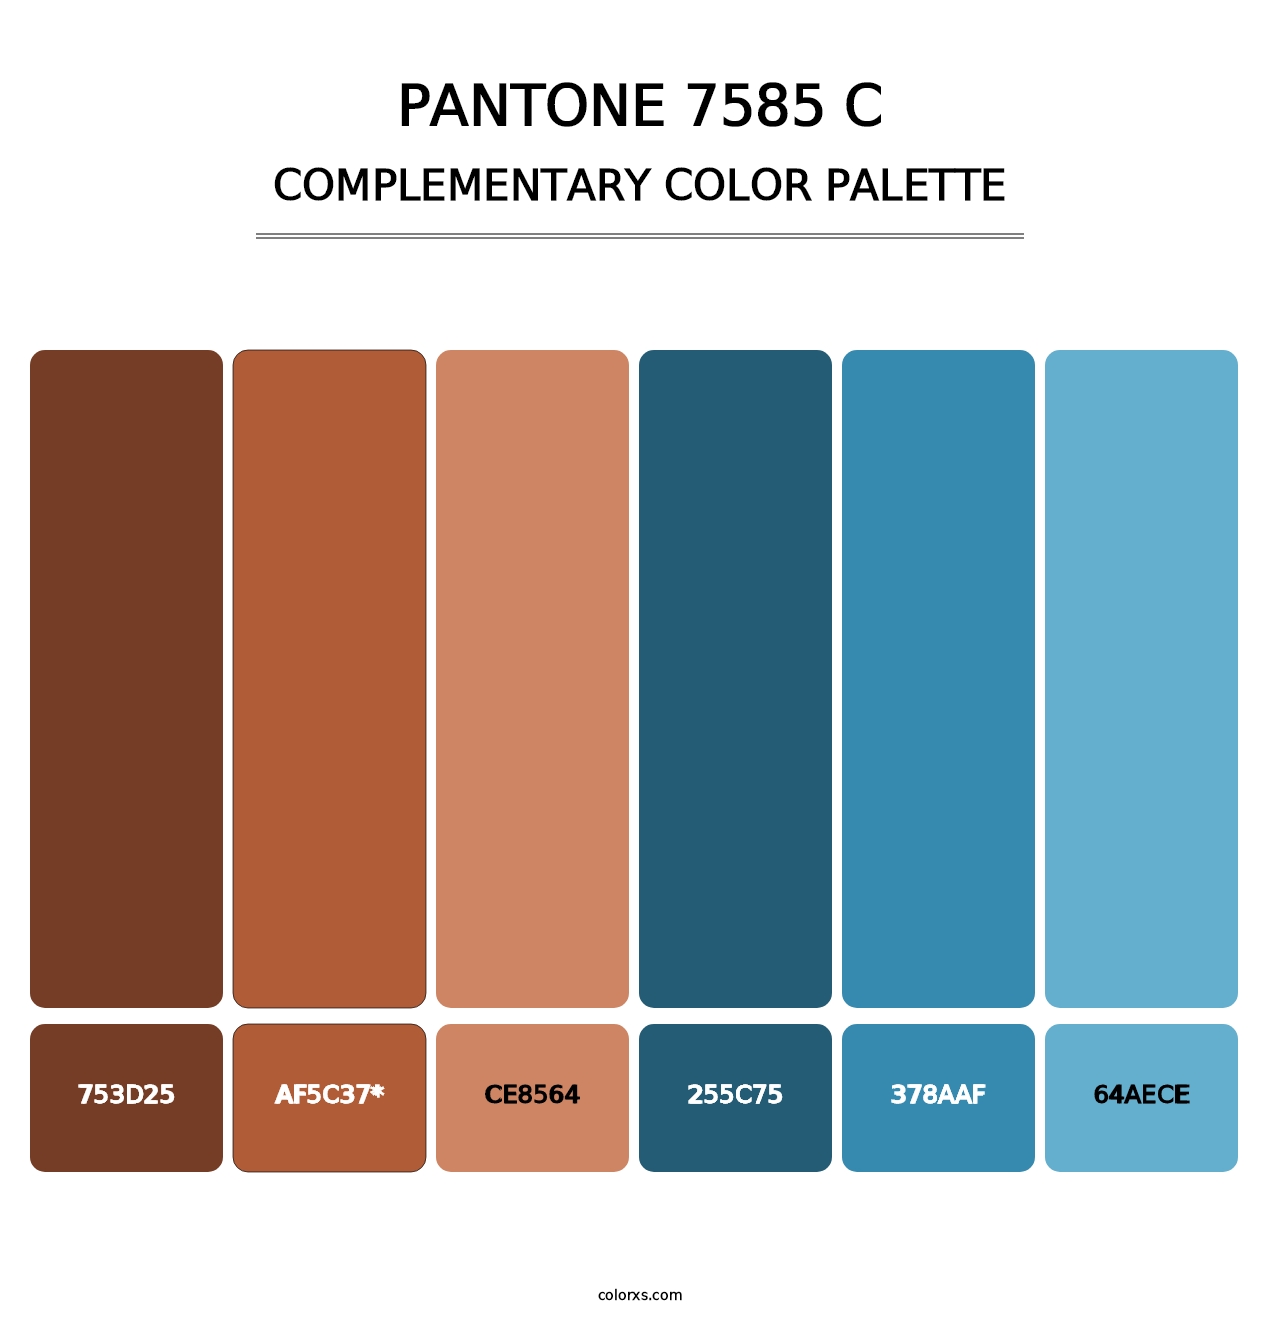 PANTONE 7585 C - Complementary Color Palette